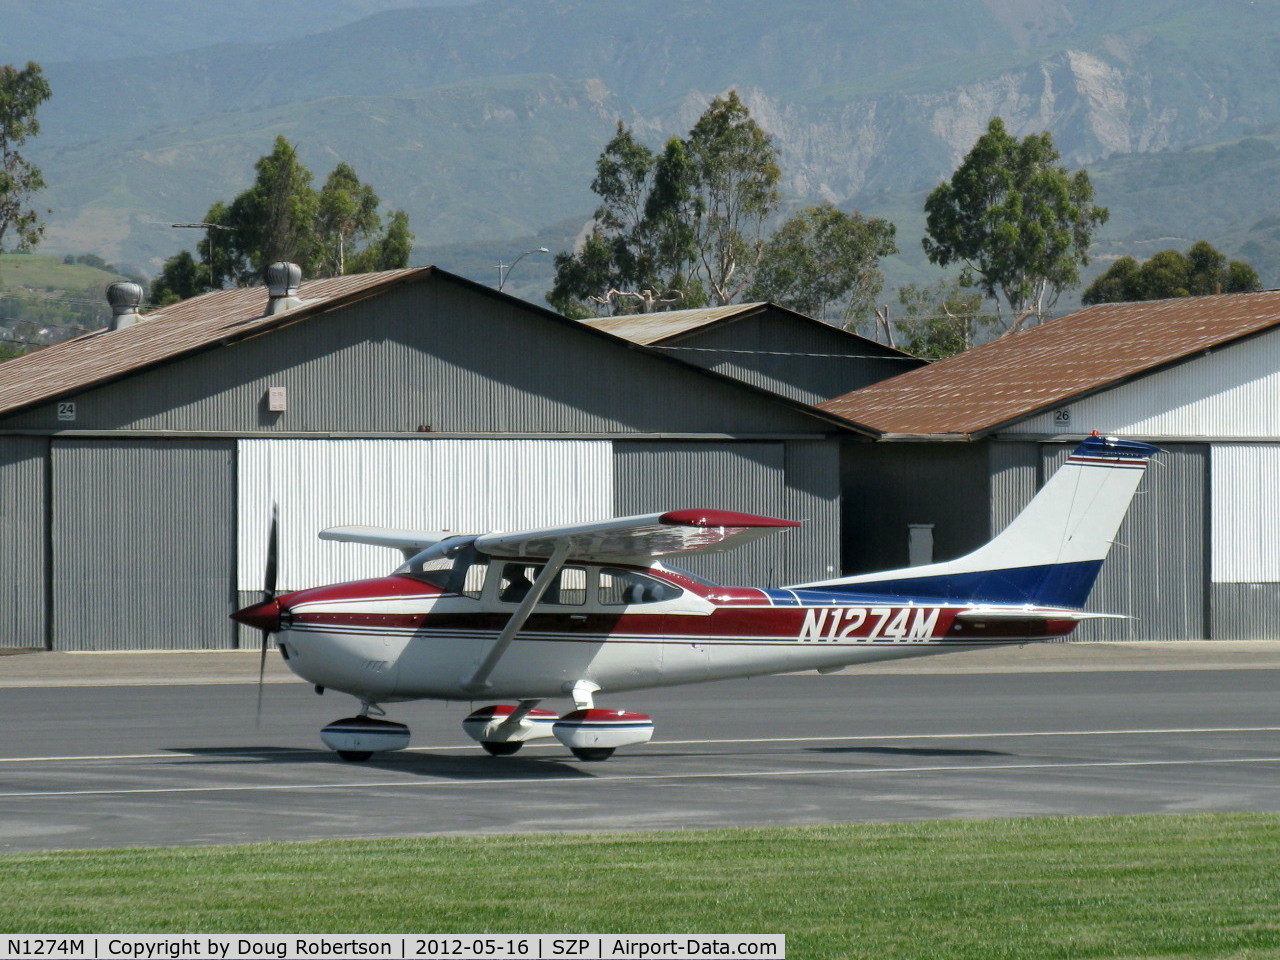 N1274M, 1975 Cessna 182P Skylane C/N 18264271, 1975 Cessna 182P SKYLANE, Continental O-470-S 230 Hp, takeoff roll Rwy 22